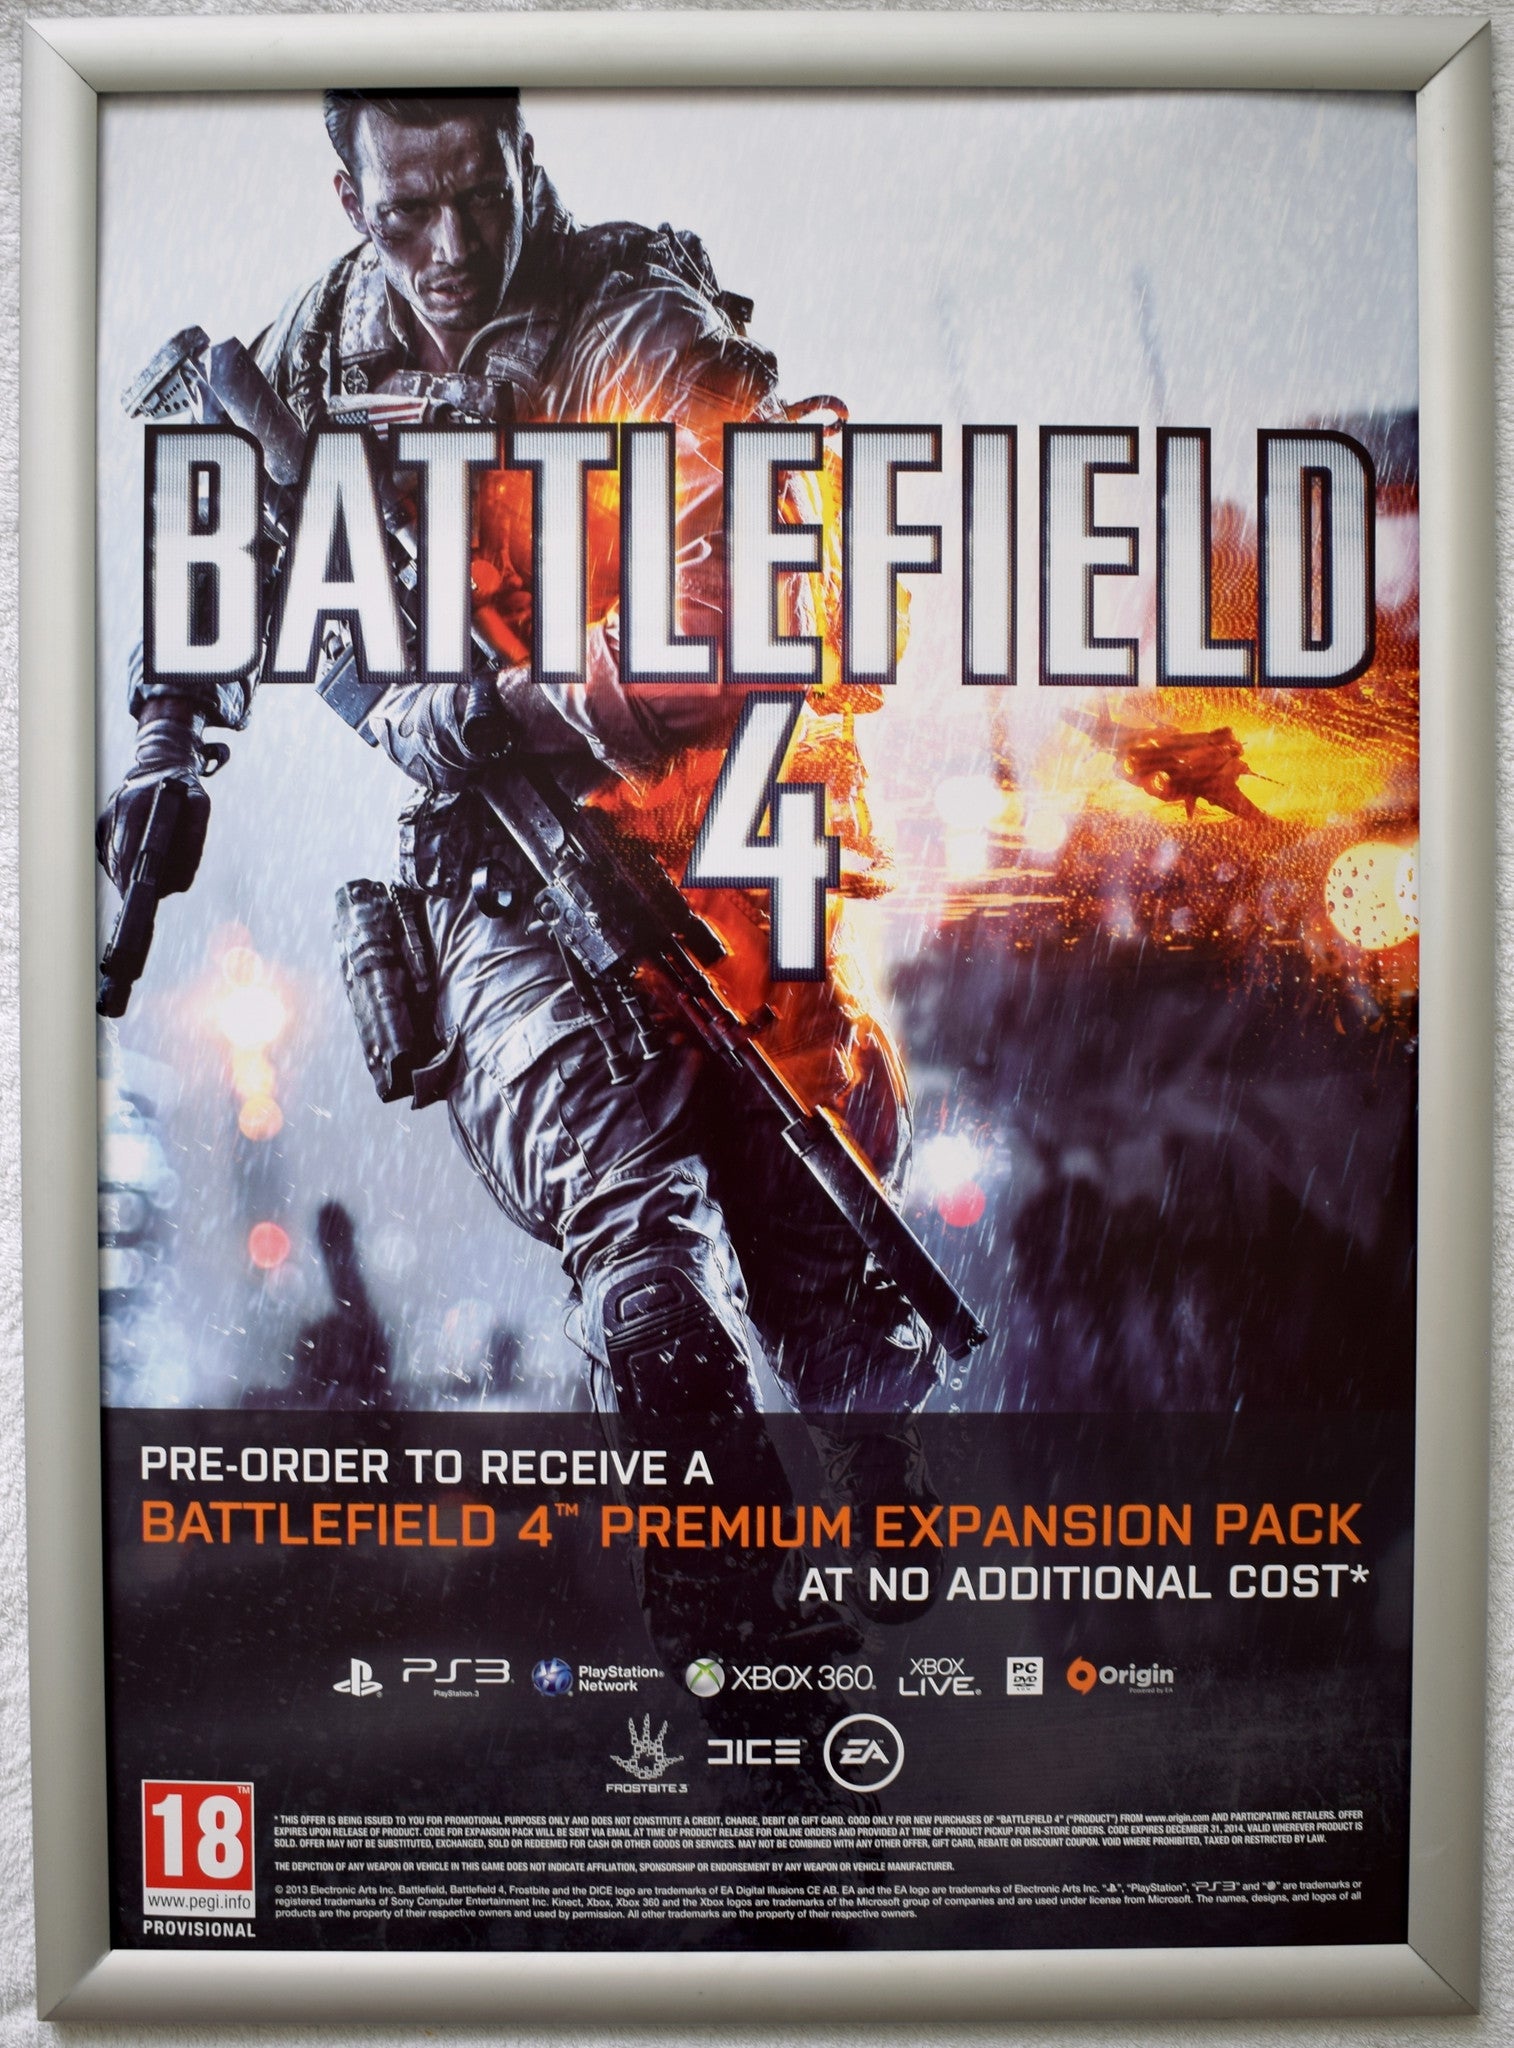 Battlefield 4 (A2) Promotional Poster #1